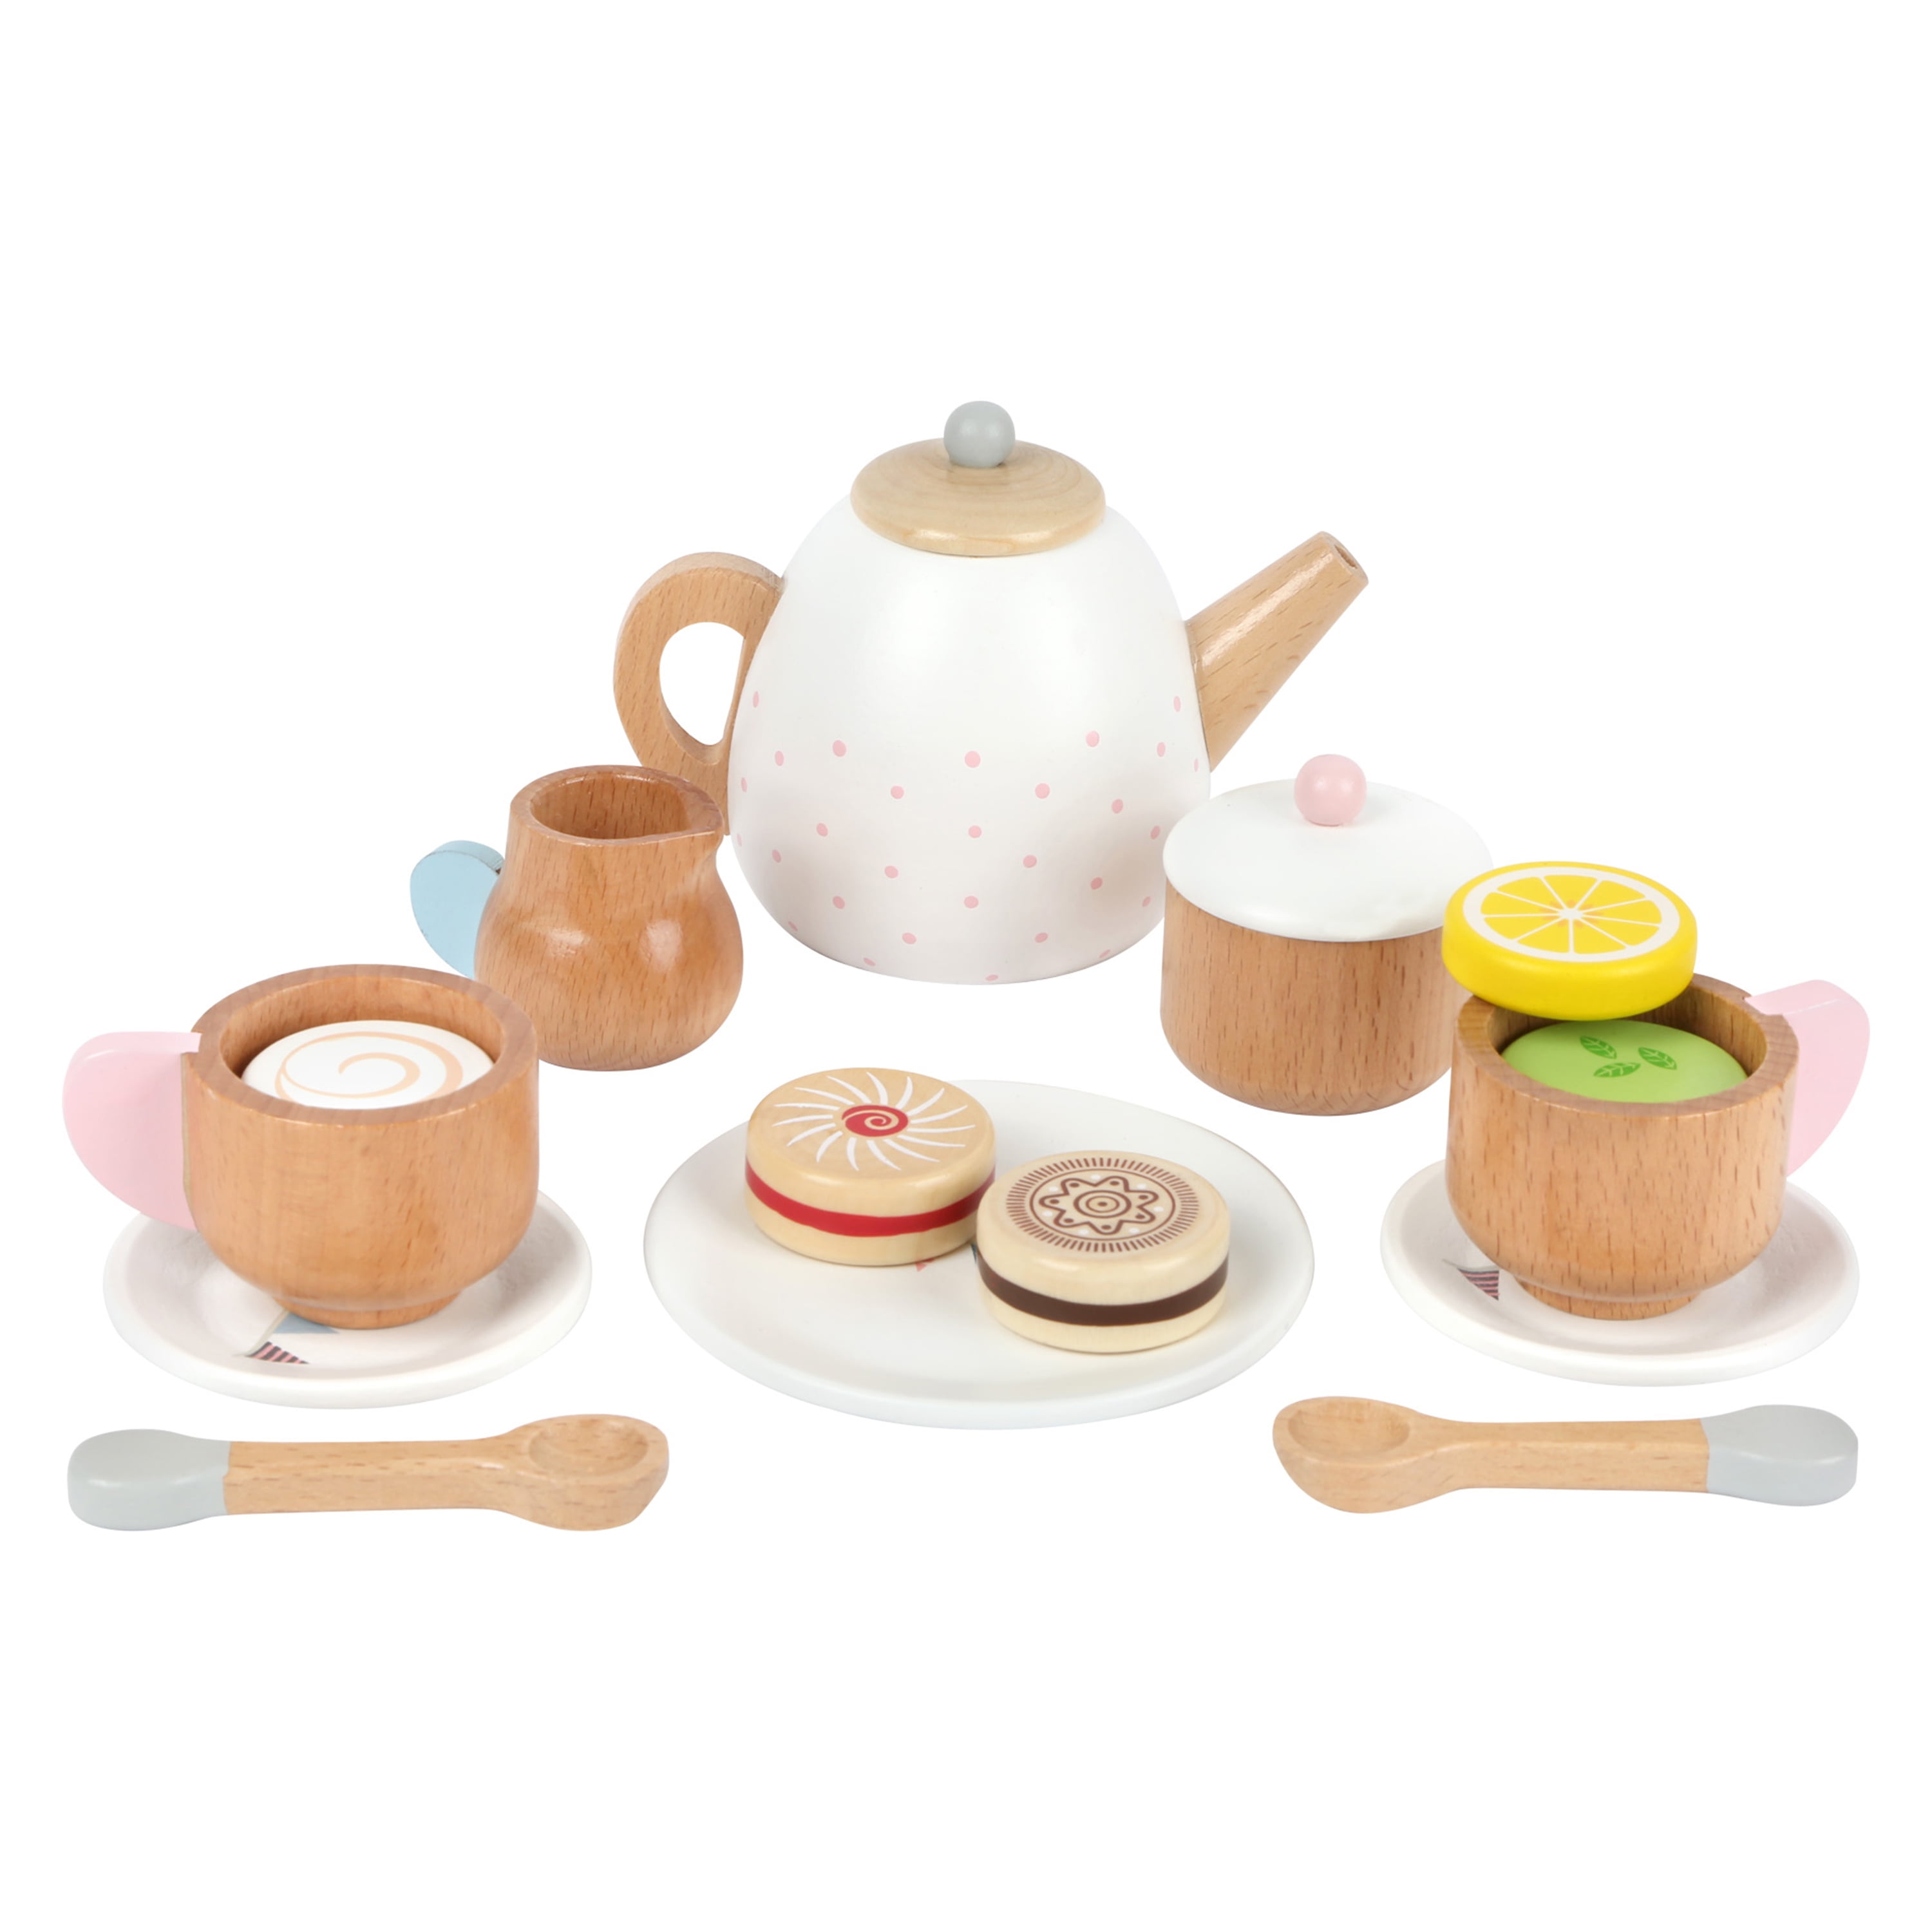 16pcs Wooden Tea Set Party Kitchens Role Play Educational Pretend Kids Toys 